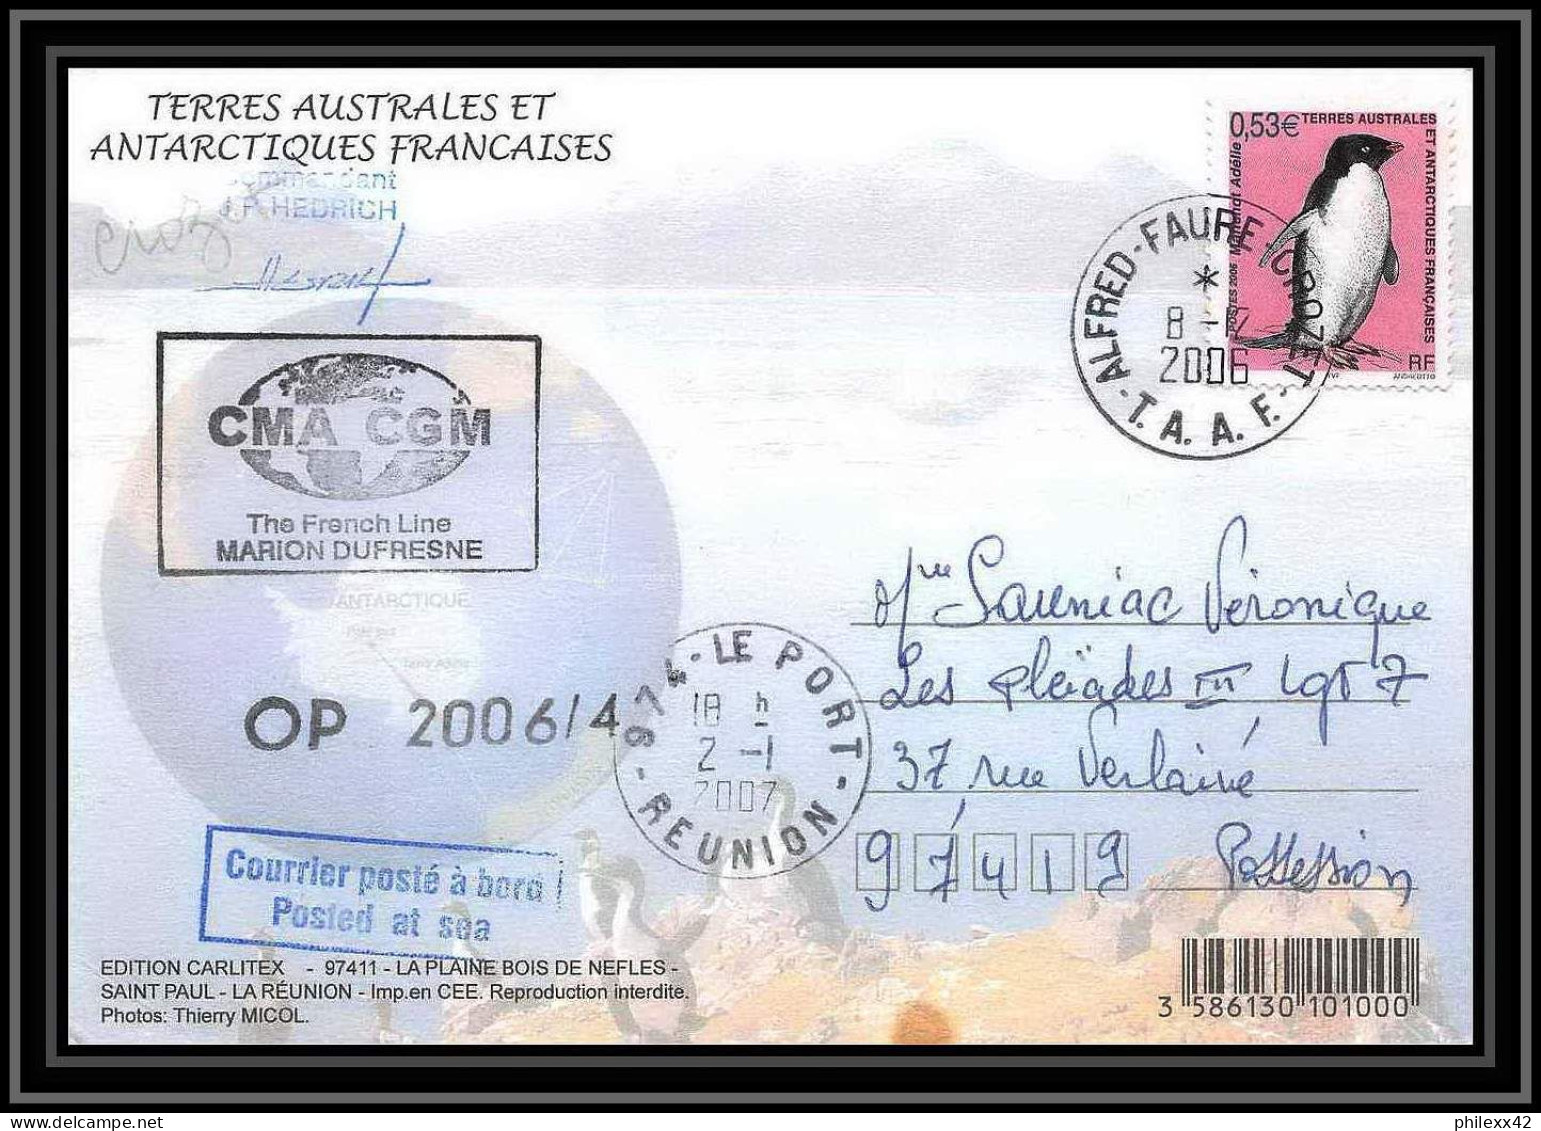 2642 ANTARCTIC Terres Australes (taaf)-carte Postale Dufresne 2 Signé Signed OP 2006/4 CROZET N°448 8/2/2006 - Expéditions Antarctiques